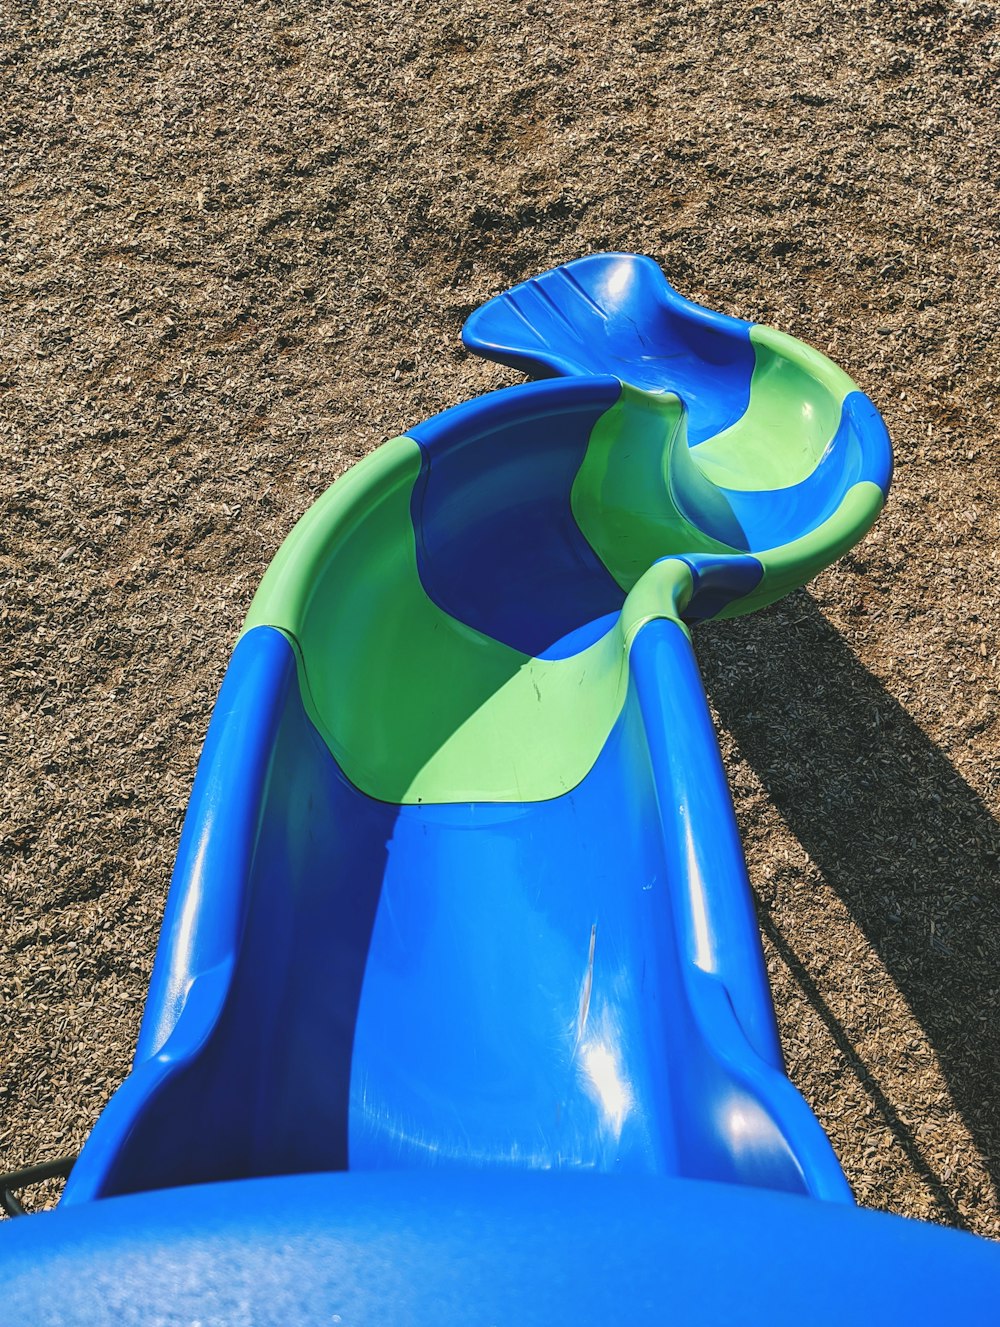 blue plastic slide on brown sand